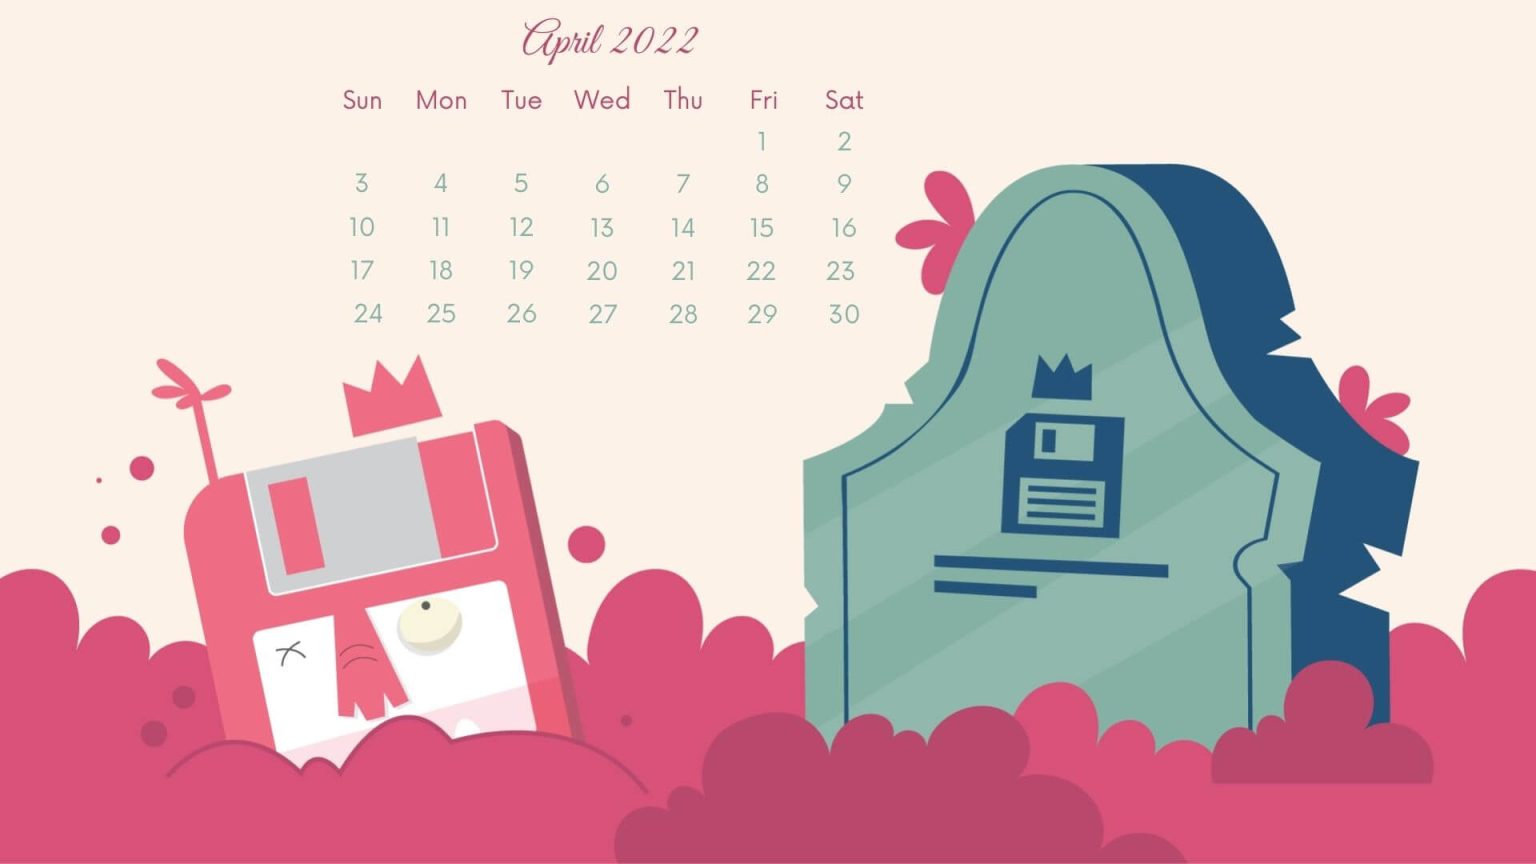 Calendar 2022 April 2022 calendar wallpaper: #April2022 #calendar2022 #wallpaper #desktop # calendar #AprilCalendar #calendario #DesktopComputer #HDWallpaper